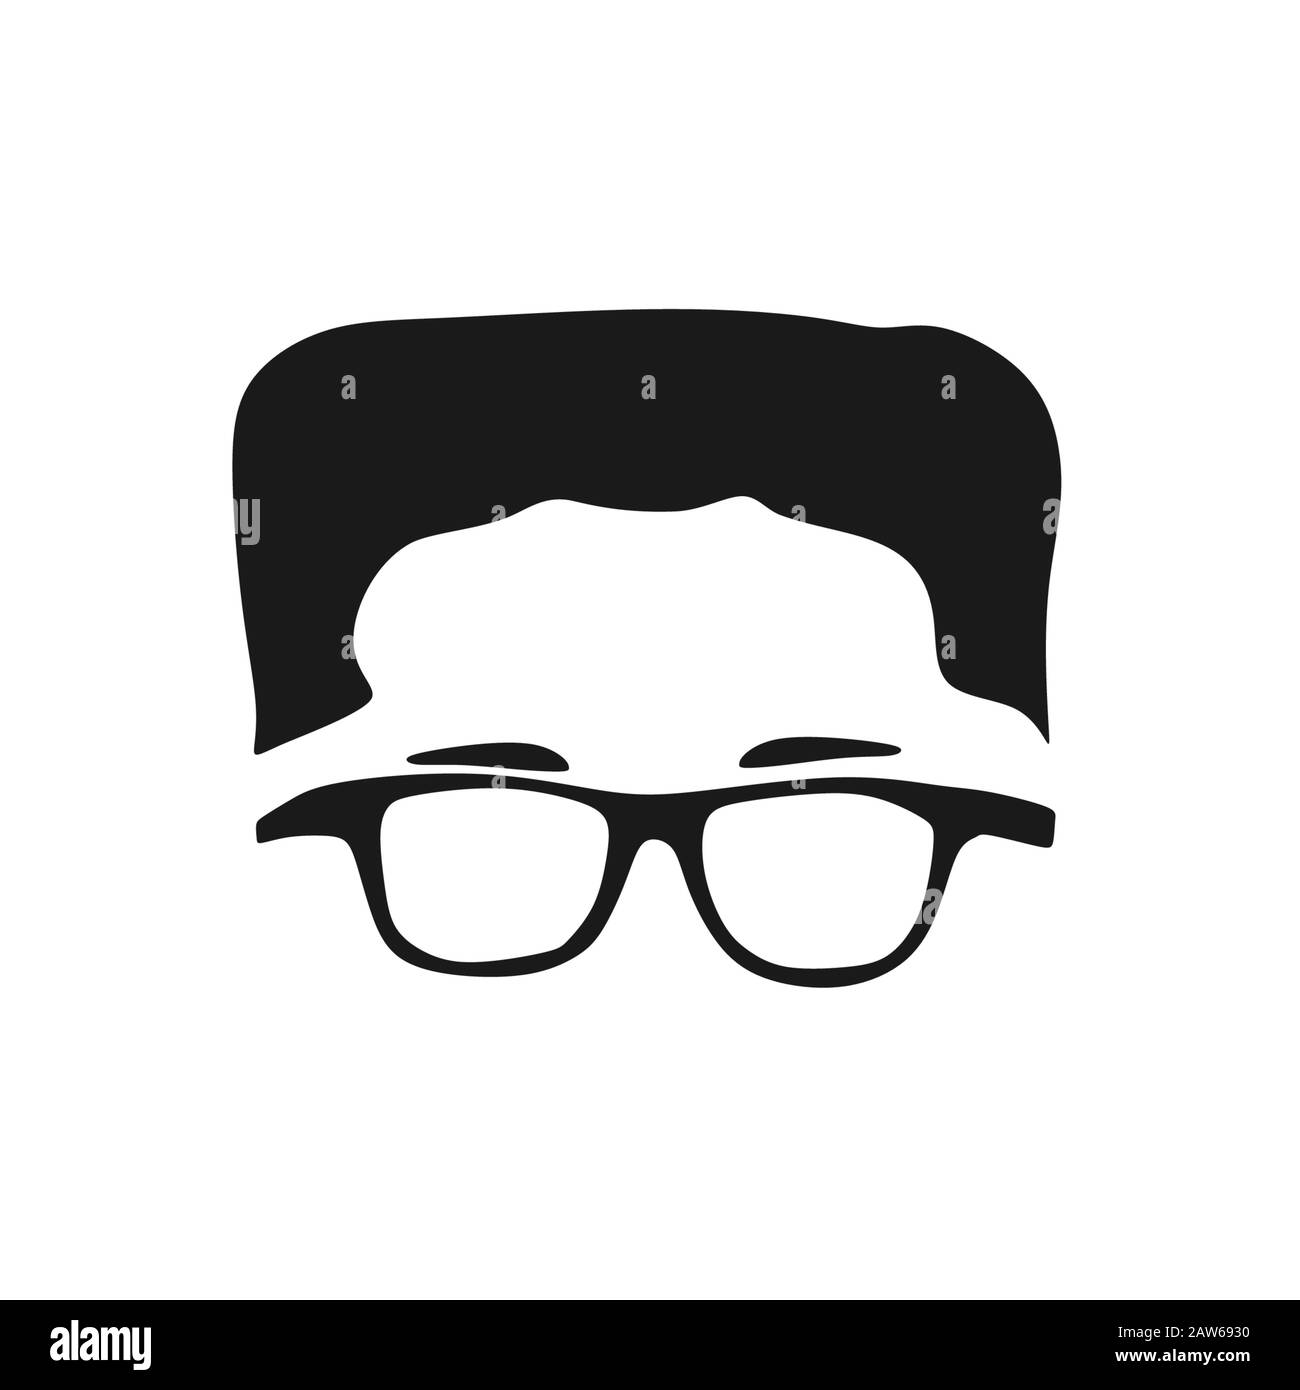 Abstraktes Porträt von Kim Jong-un Stock Vektor